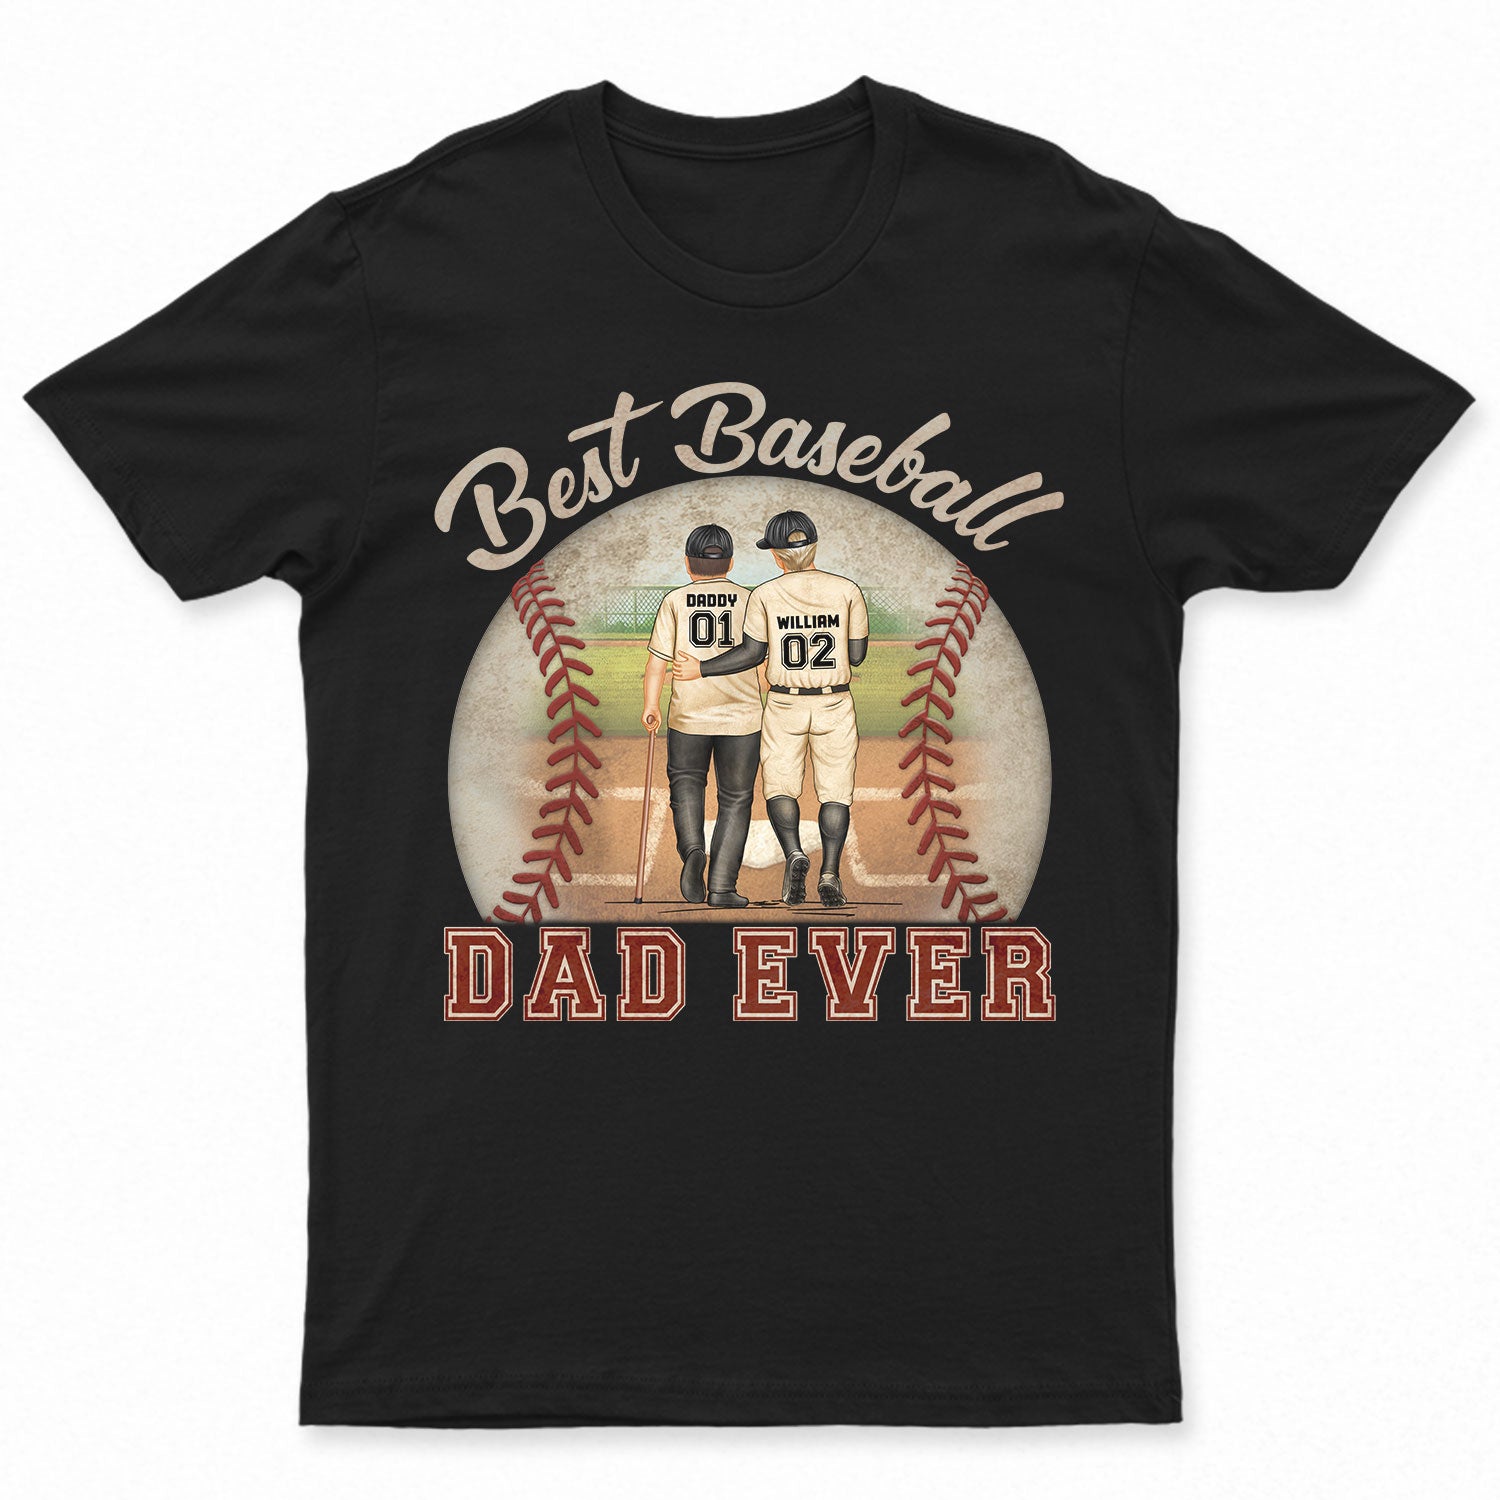 Best Baseball Softball Dad Ever - Birthday Gift For Sport Fan, Father, Grandpa - Personalized Custom T Shirt